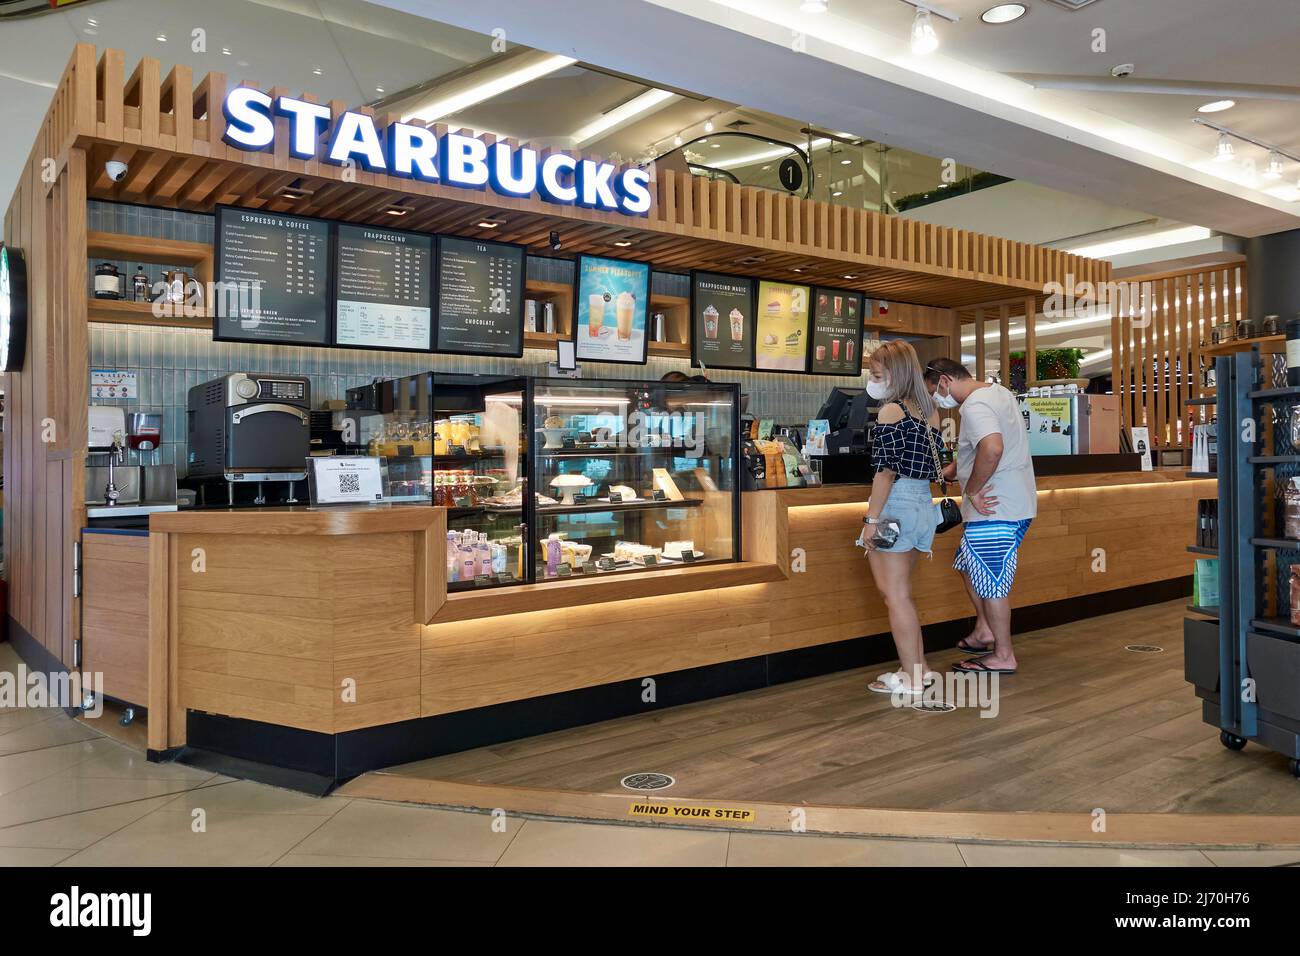 Starbucks interior counter display with customers Stock Photo